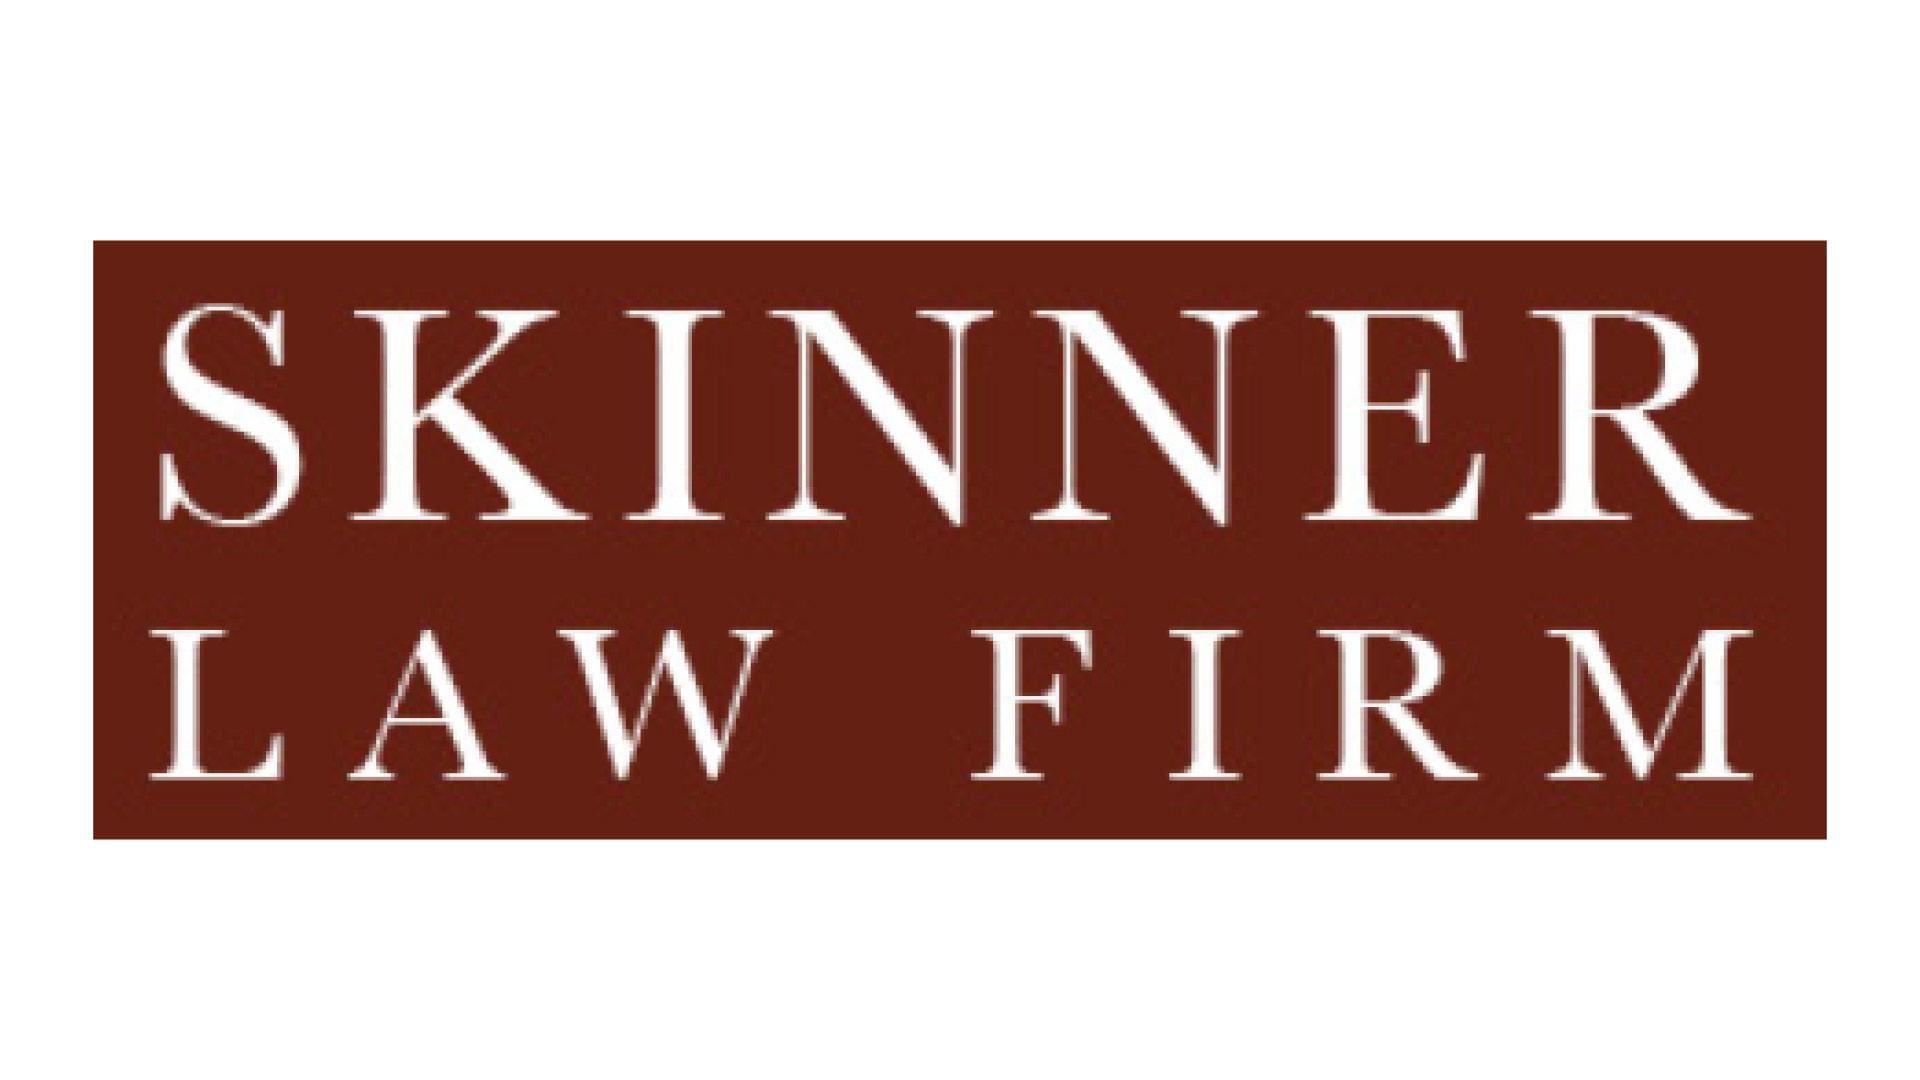 Skinner Law Firm